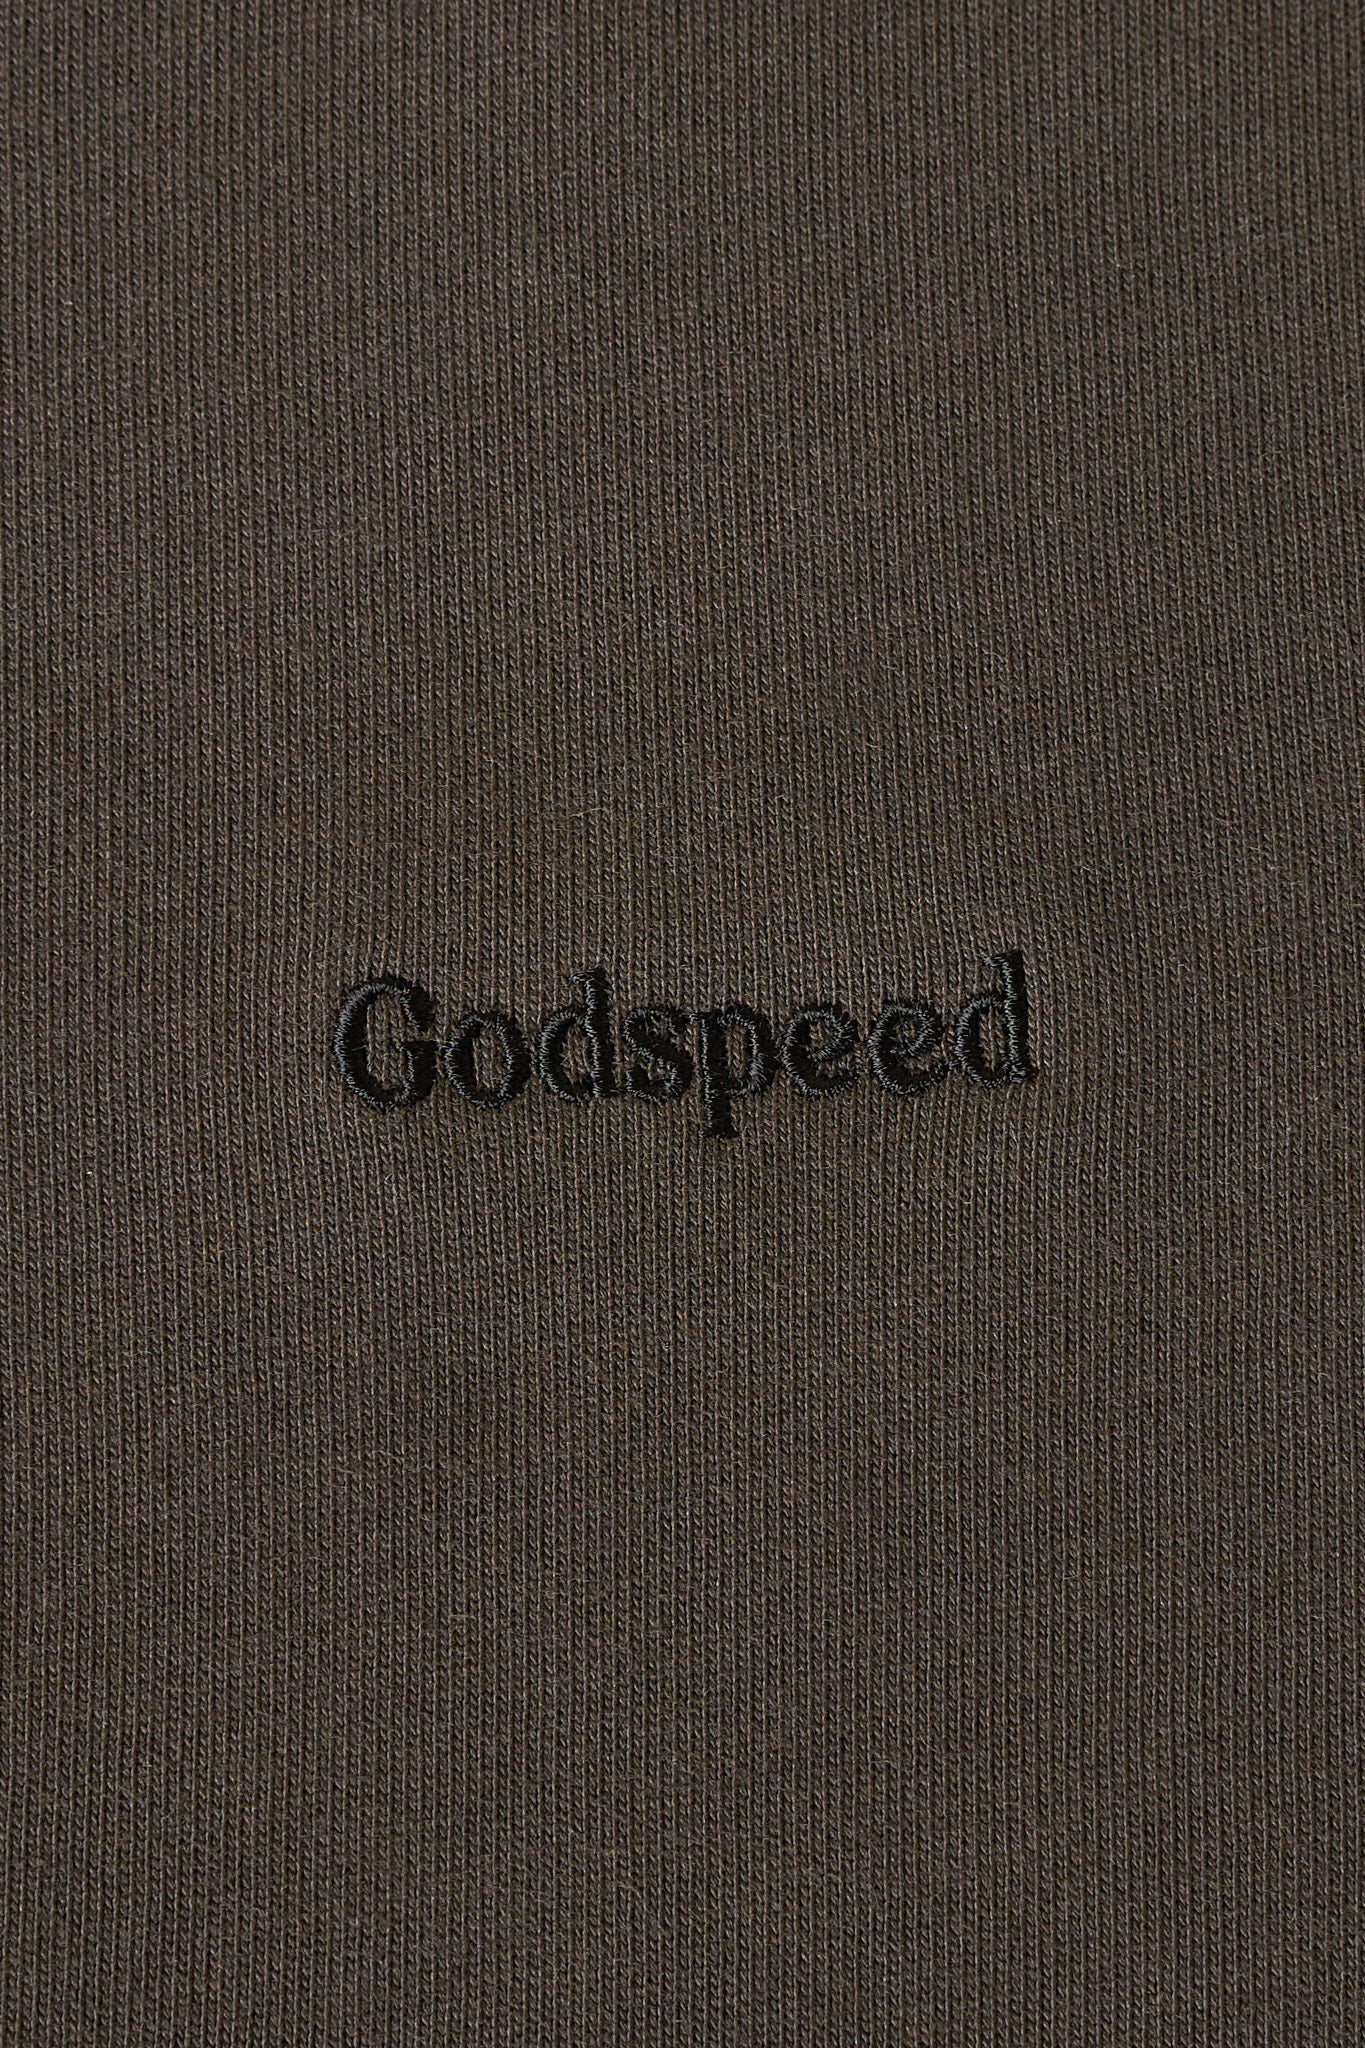 Godspeed Tonal Mini Logo Heavyweight Organic T-Shirt - Vintage Black -Godspeed - URAHARA